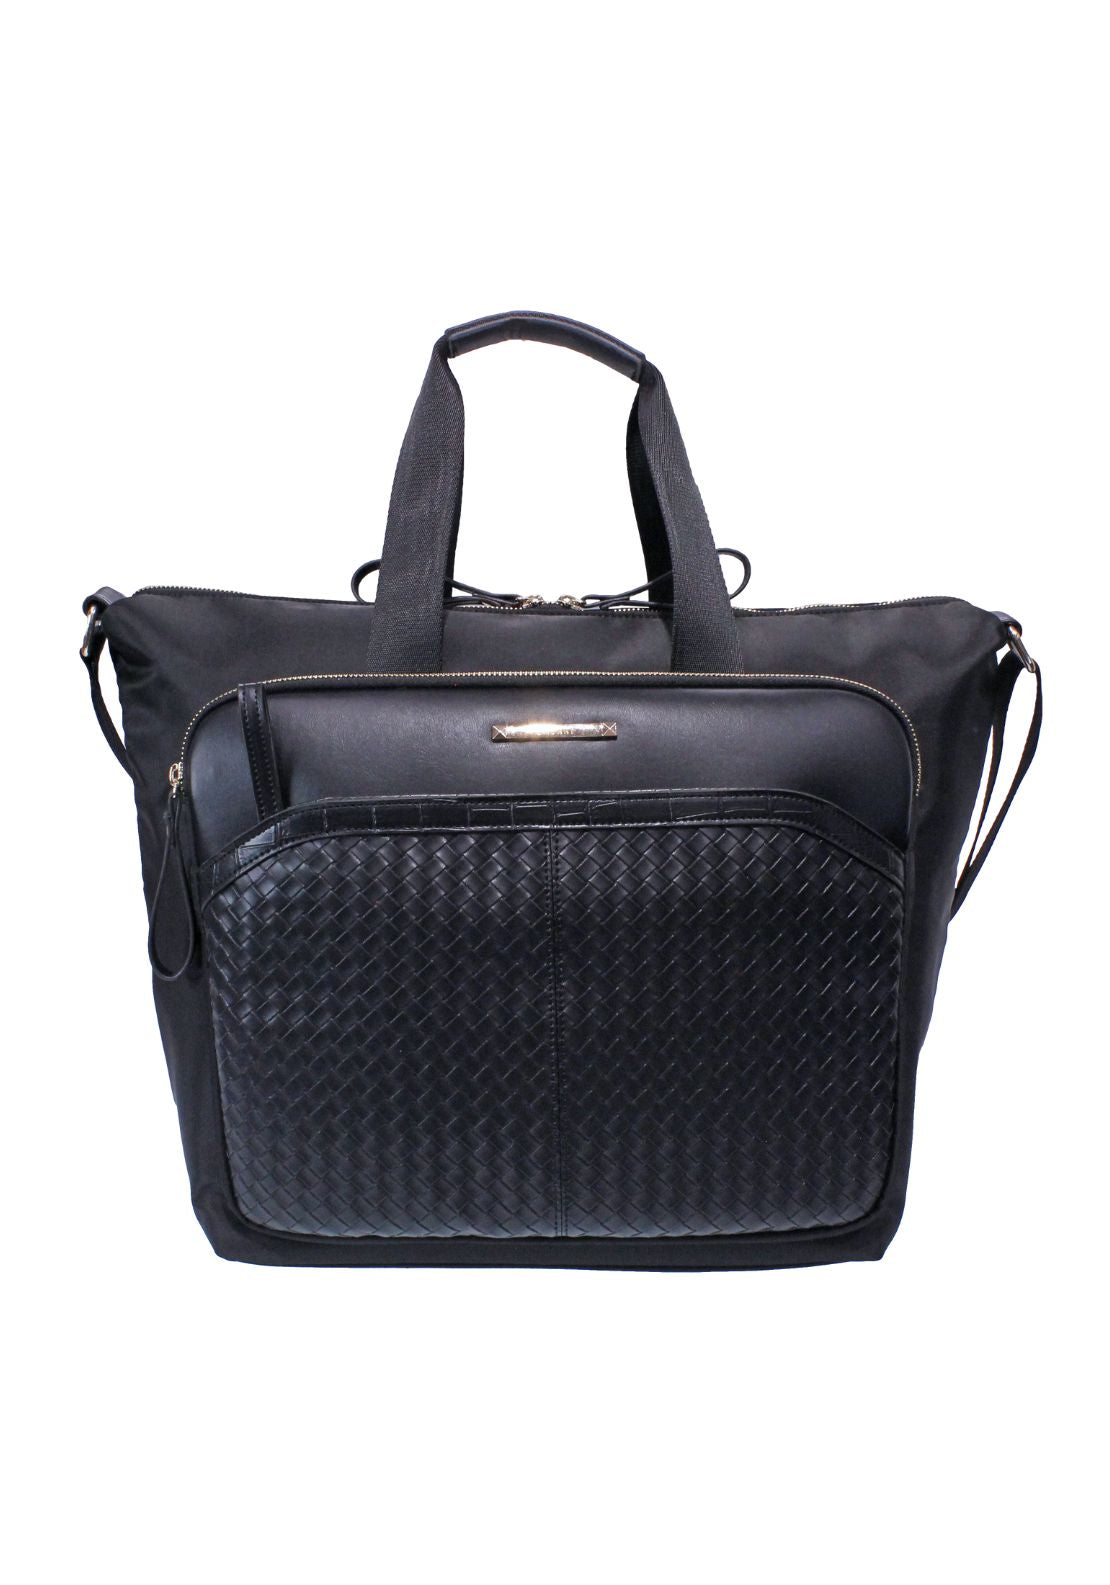 Gionni Fashion Luggage Bag - Black 1 Shaws Department Stores